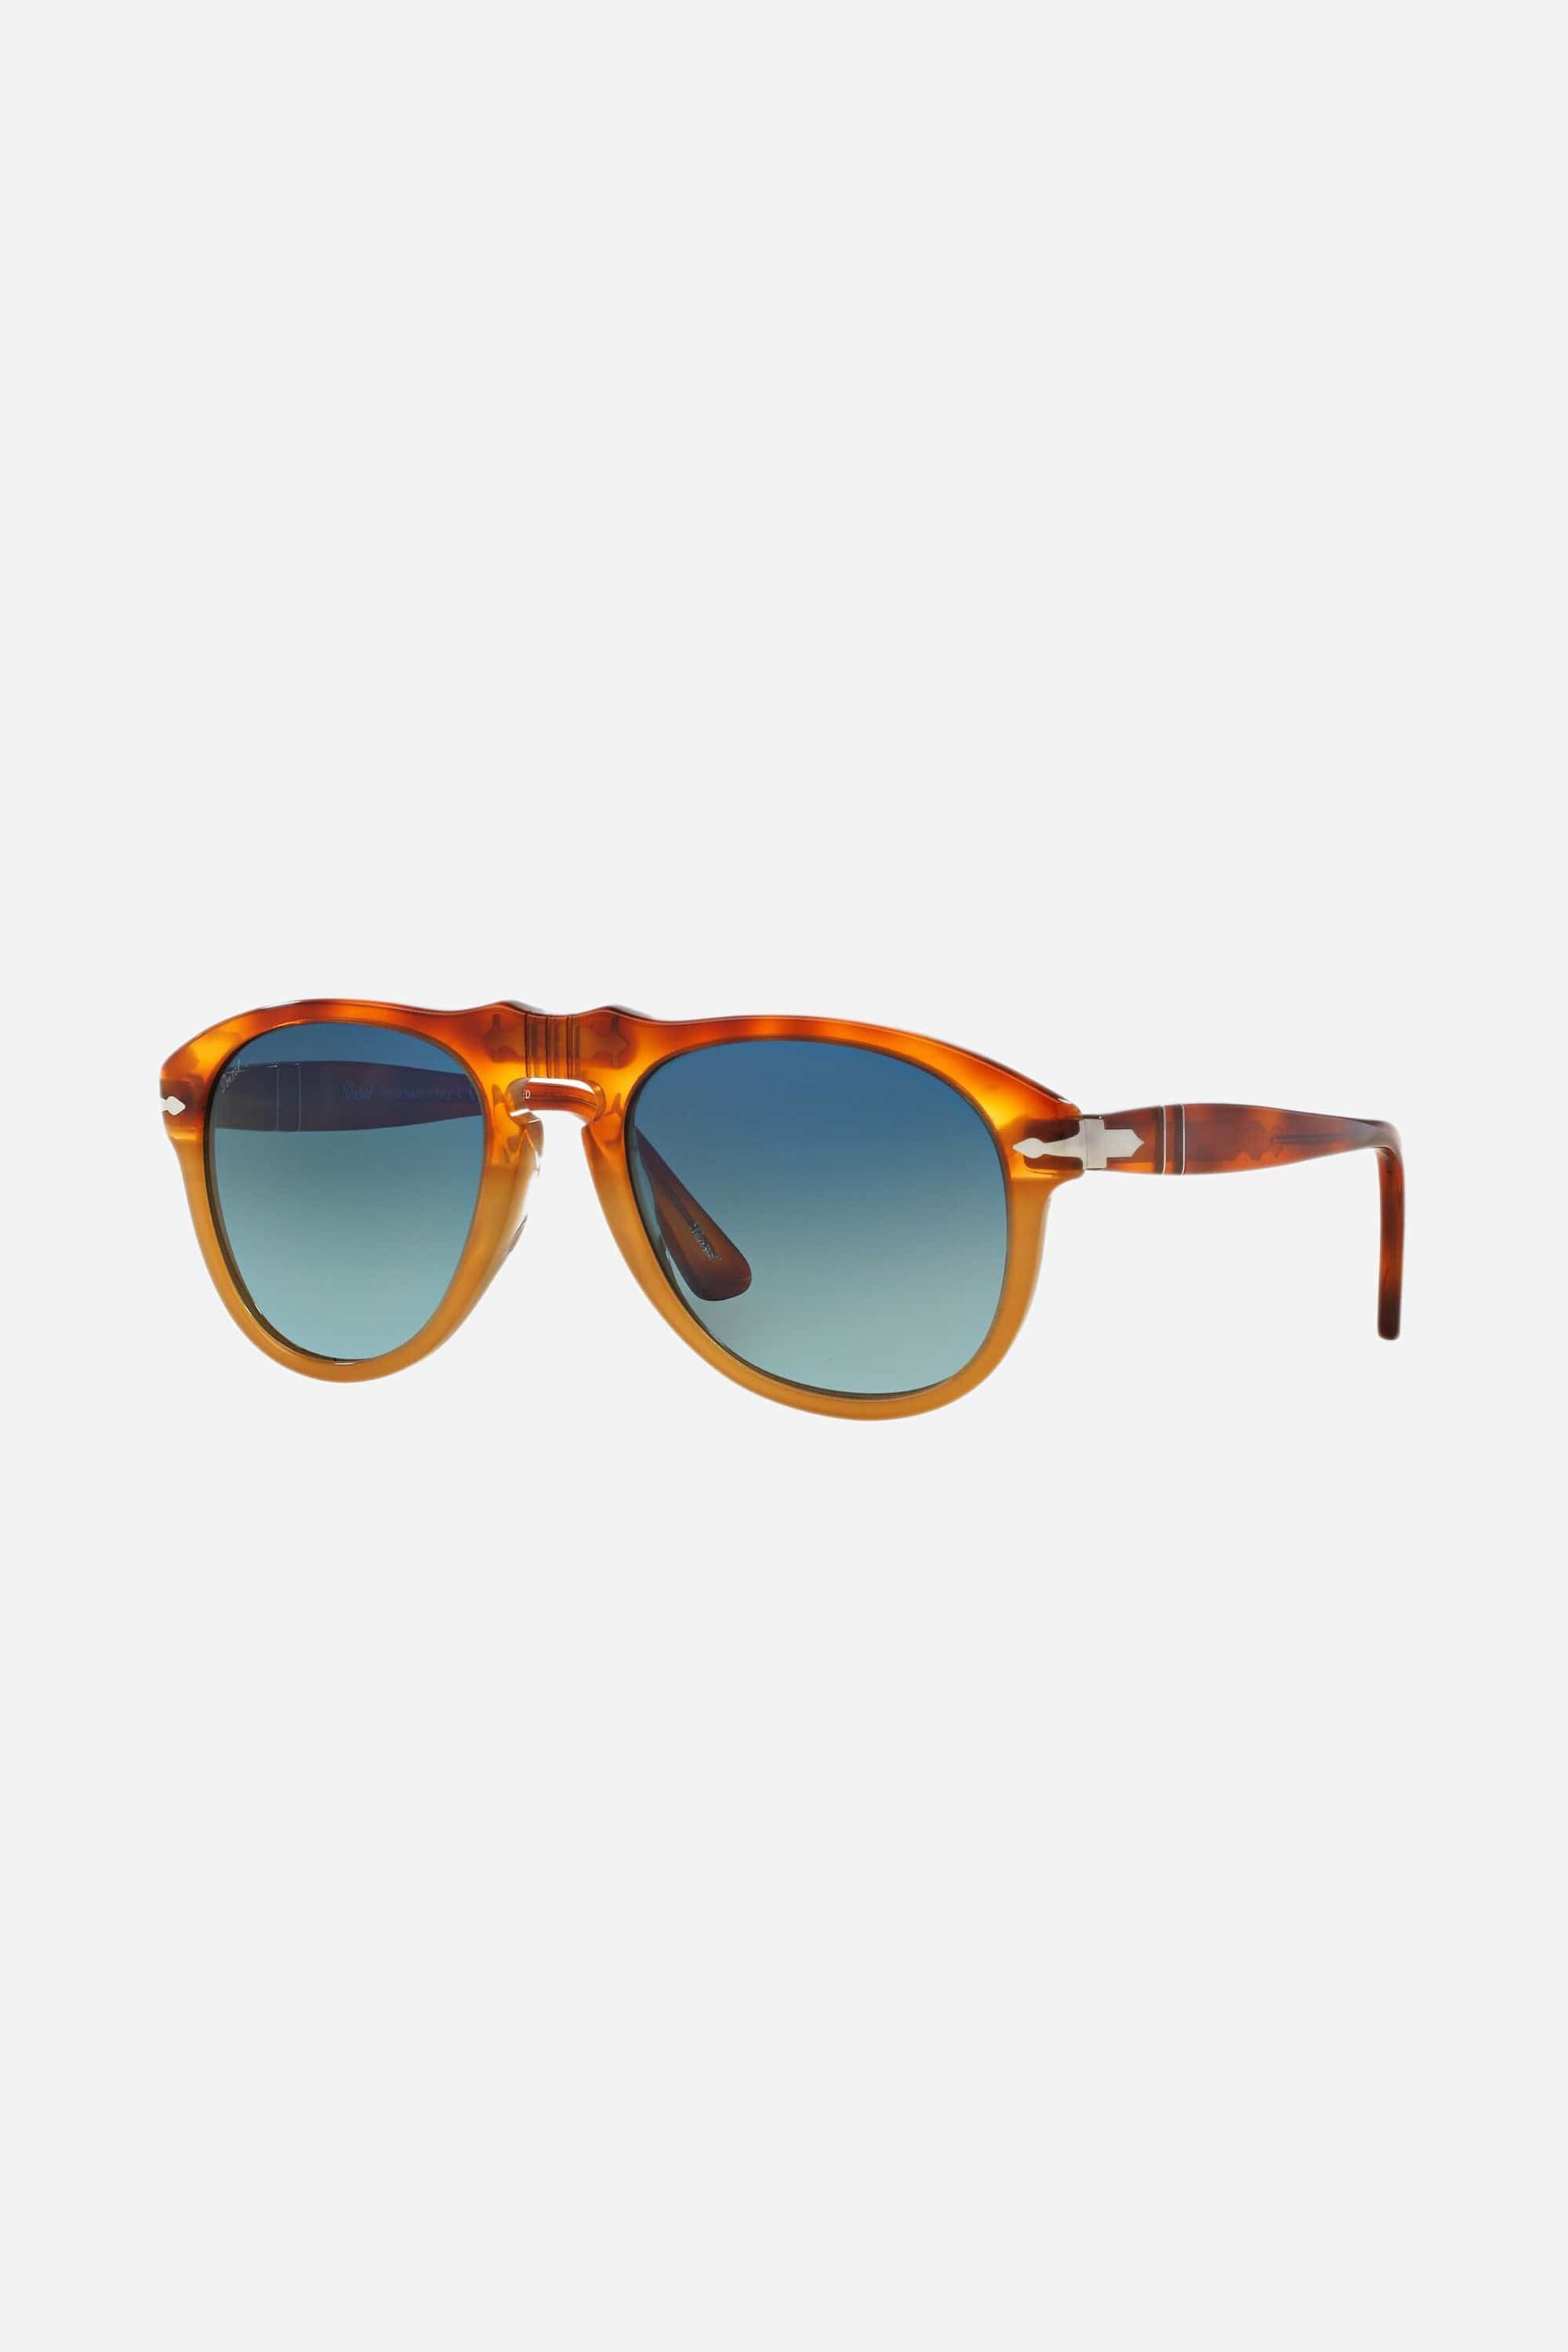 Persol pilot light havana sunglasses - Eyewear Club